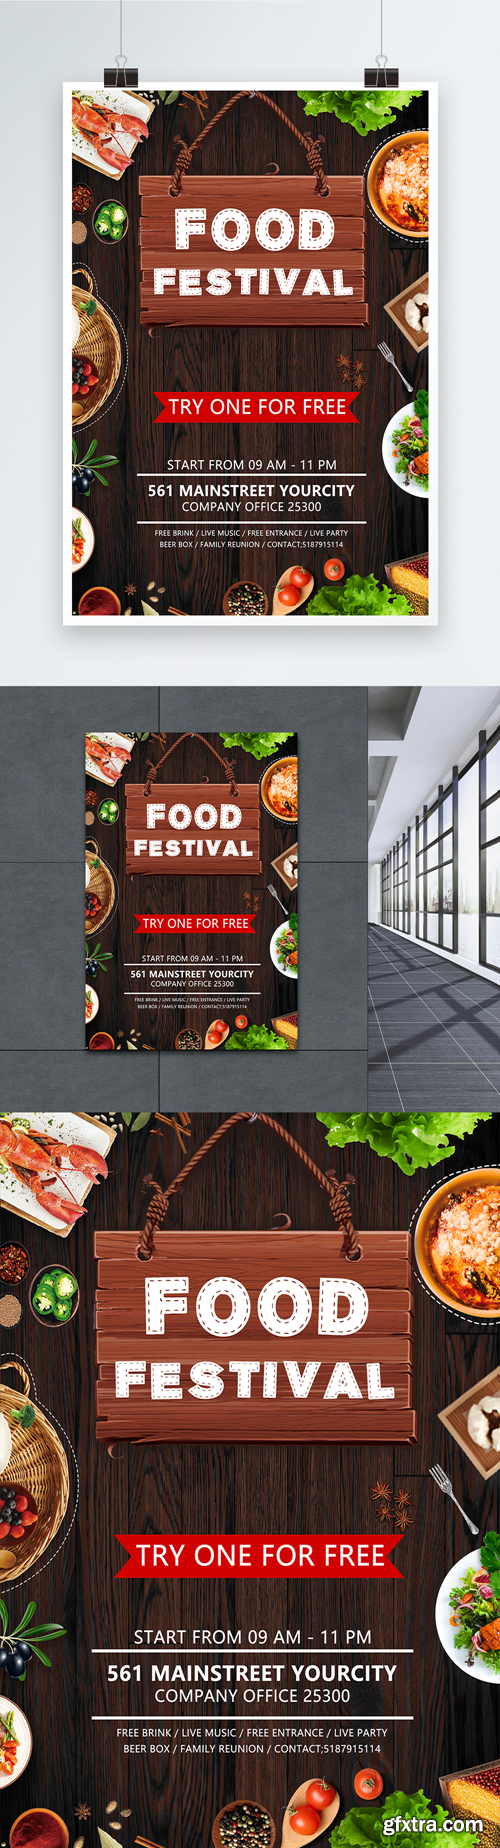 food festival poster